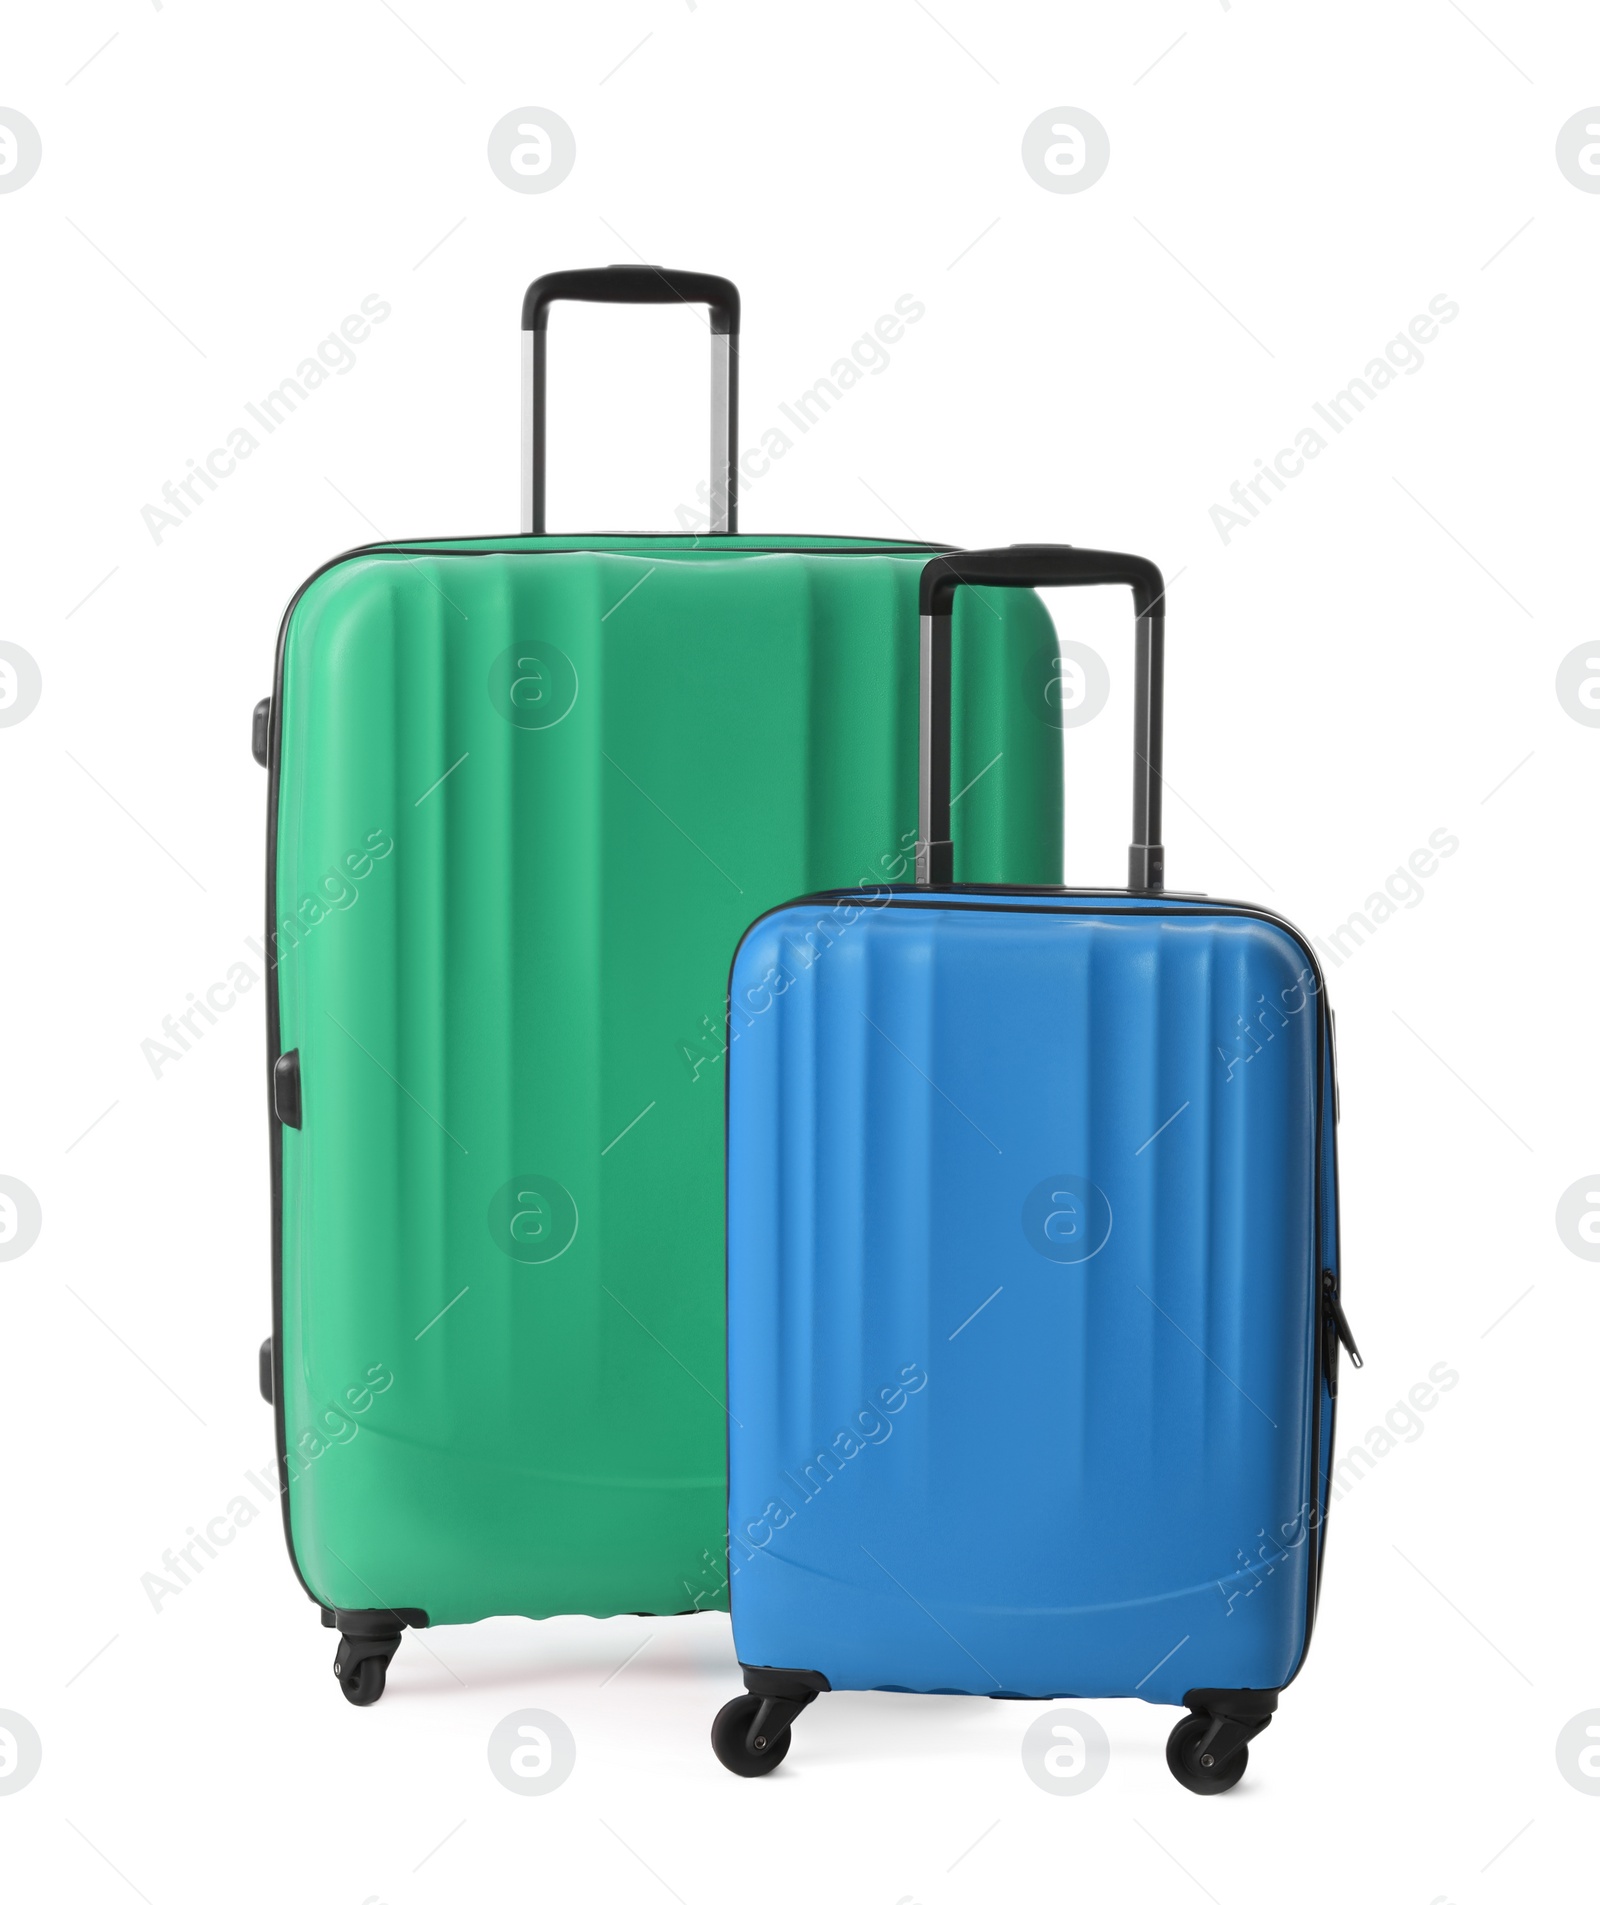 Image of Stylish suitcases for travelling on white background